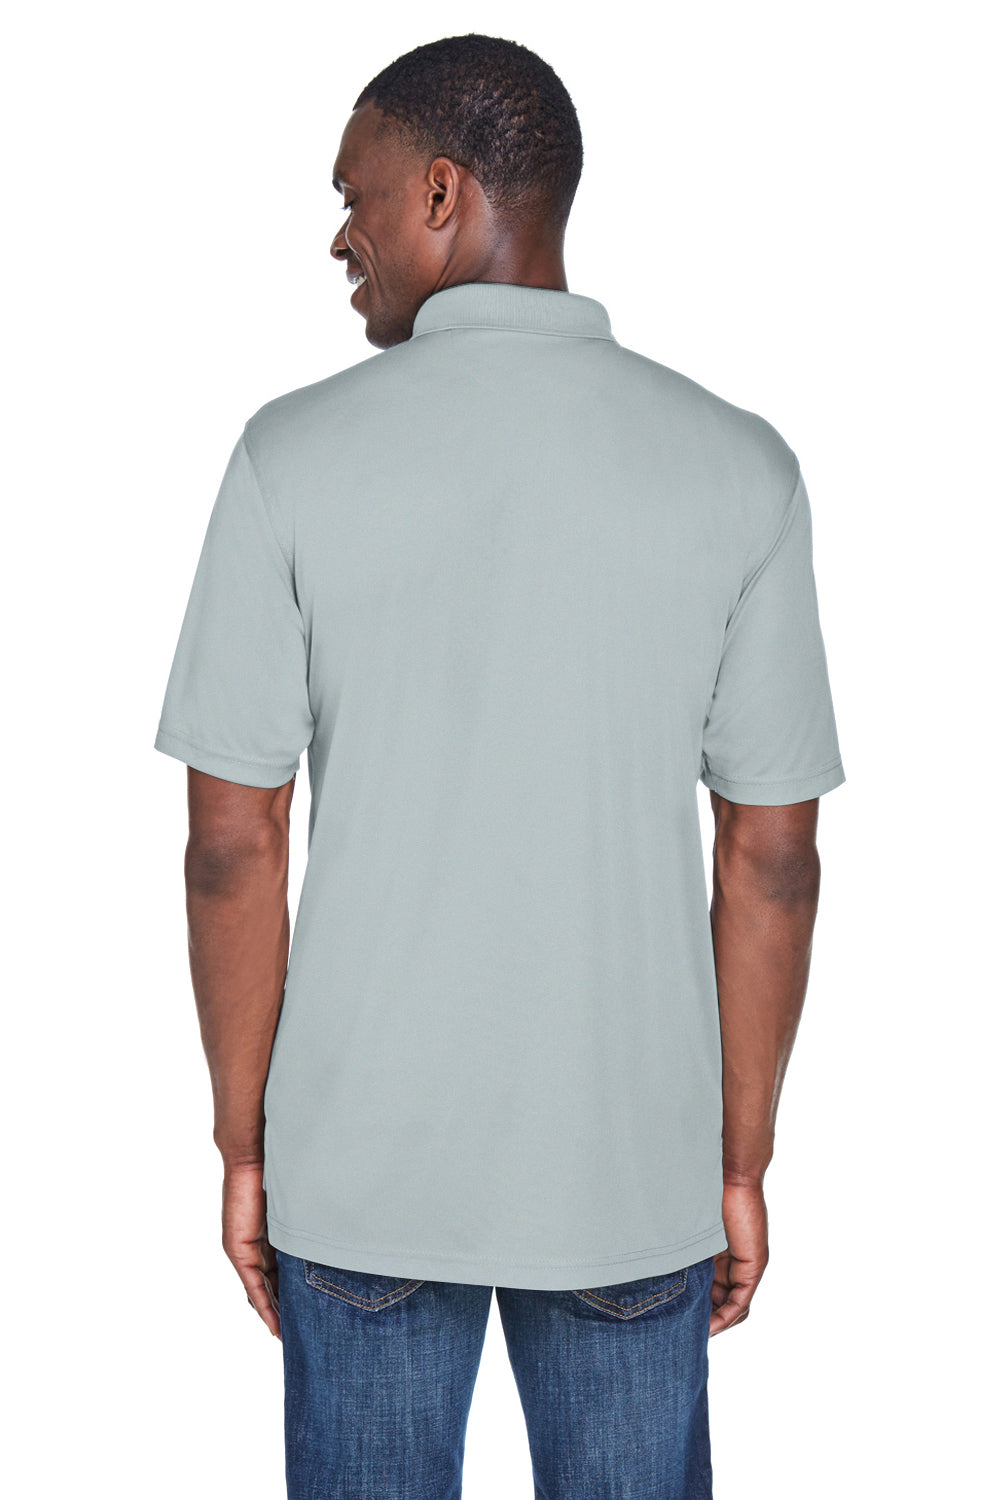 UltraClub 8425 Mens Cool & Dry Performance Moisture Wicking Short Sleeve Polo Shirt Grey Back